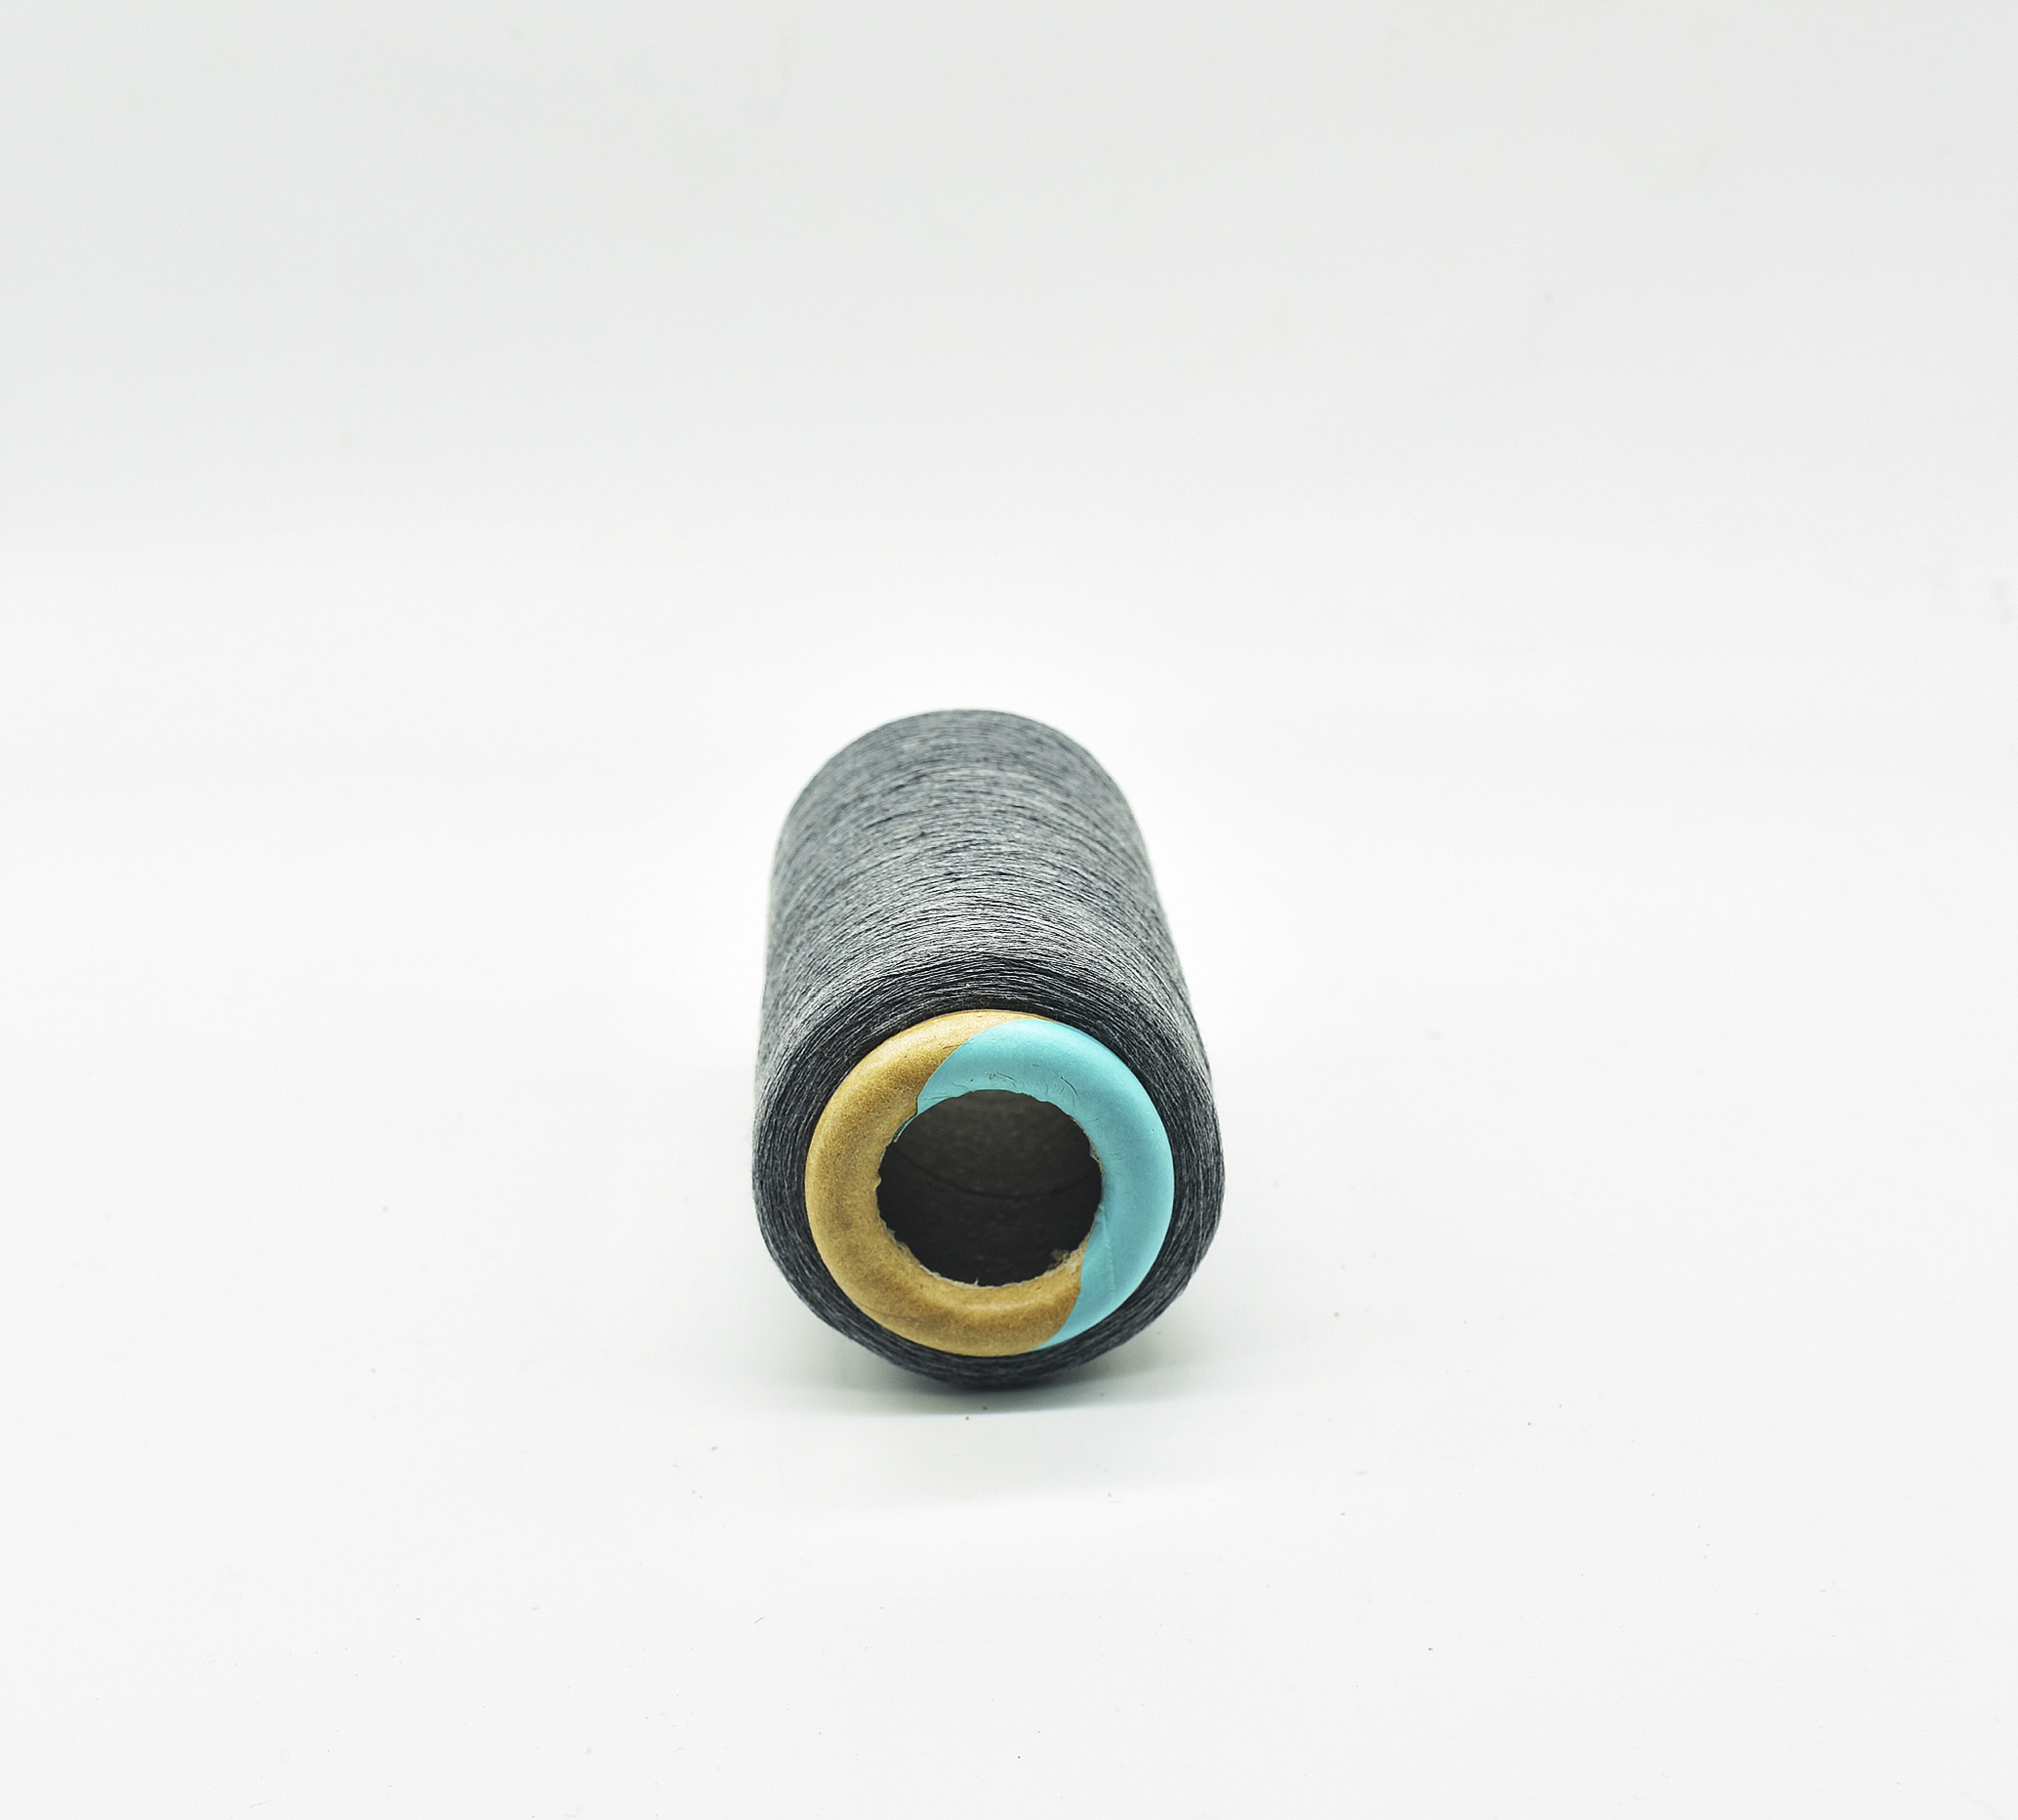 NE 12S melange grey recycled cotton polyester yarn for knitting socks 